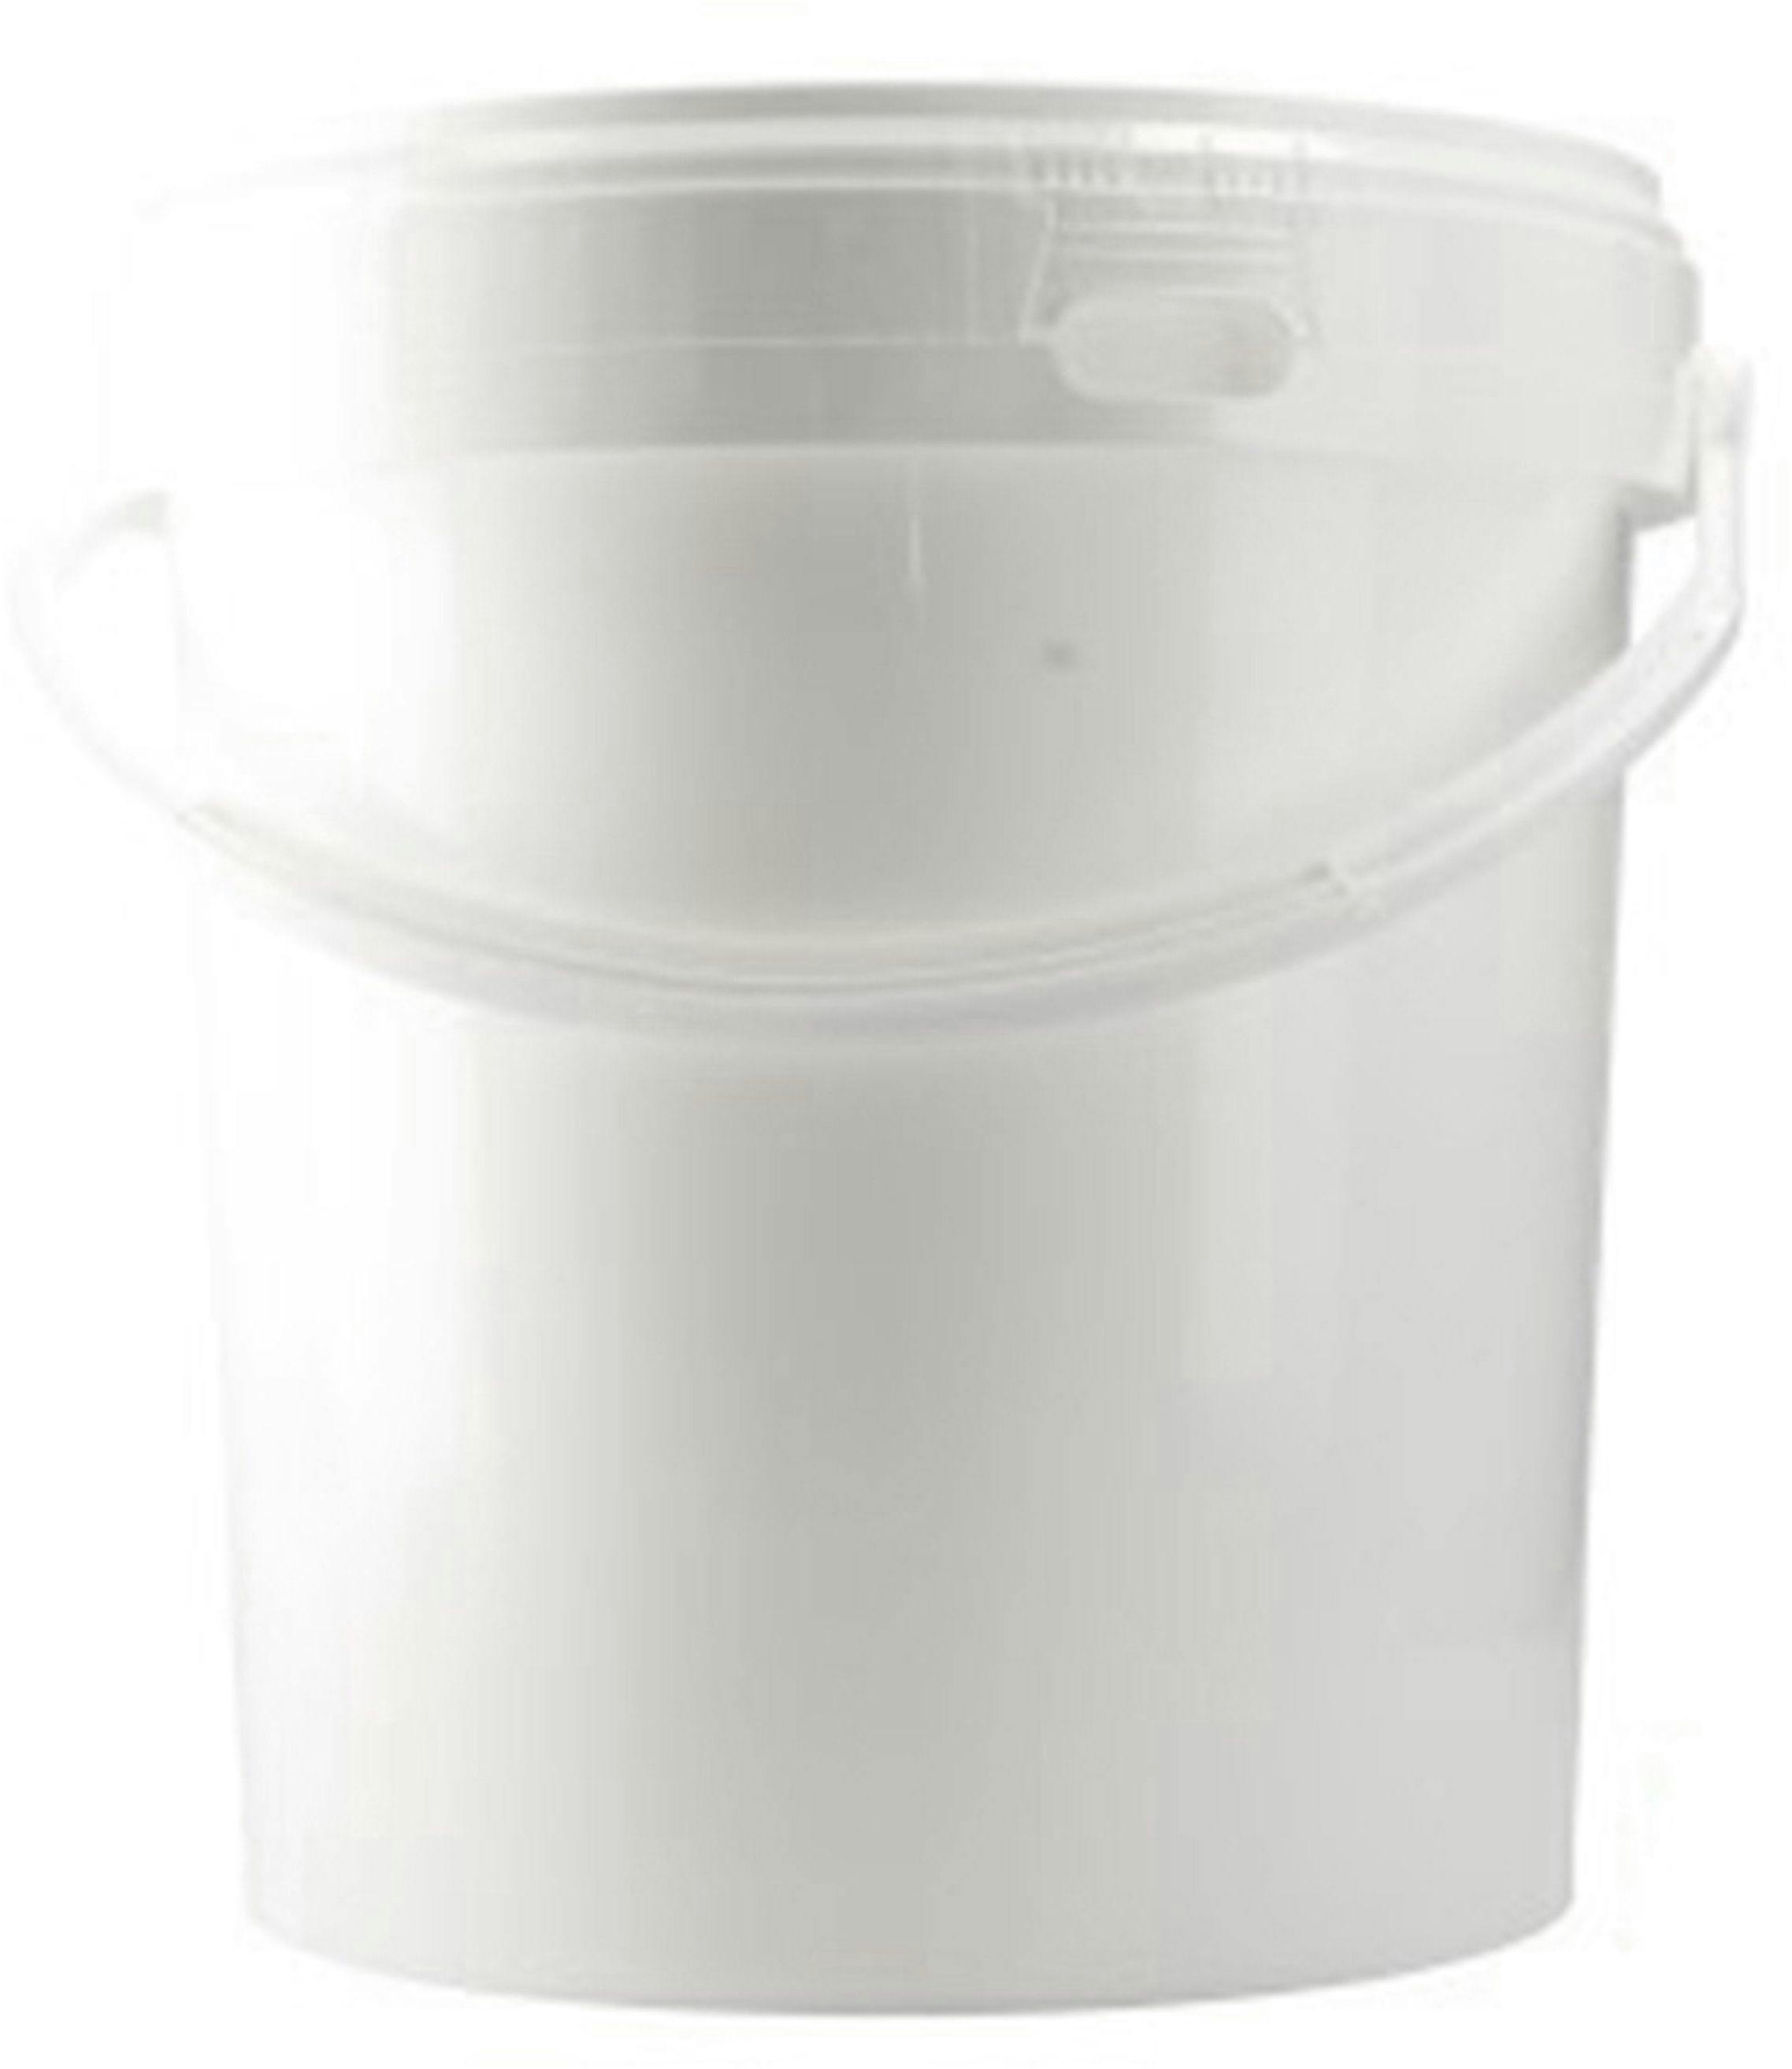 Bucket 17 L WHITE D301 ASA PLASTIC JHL 170